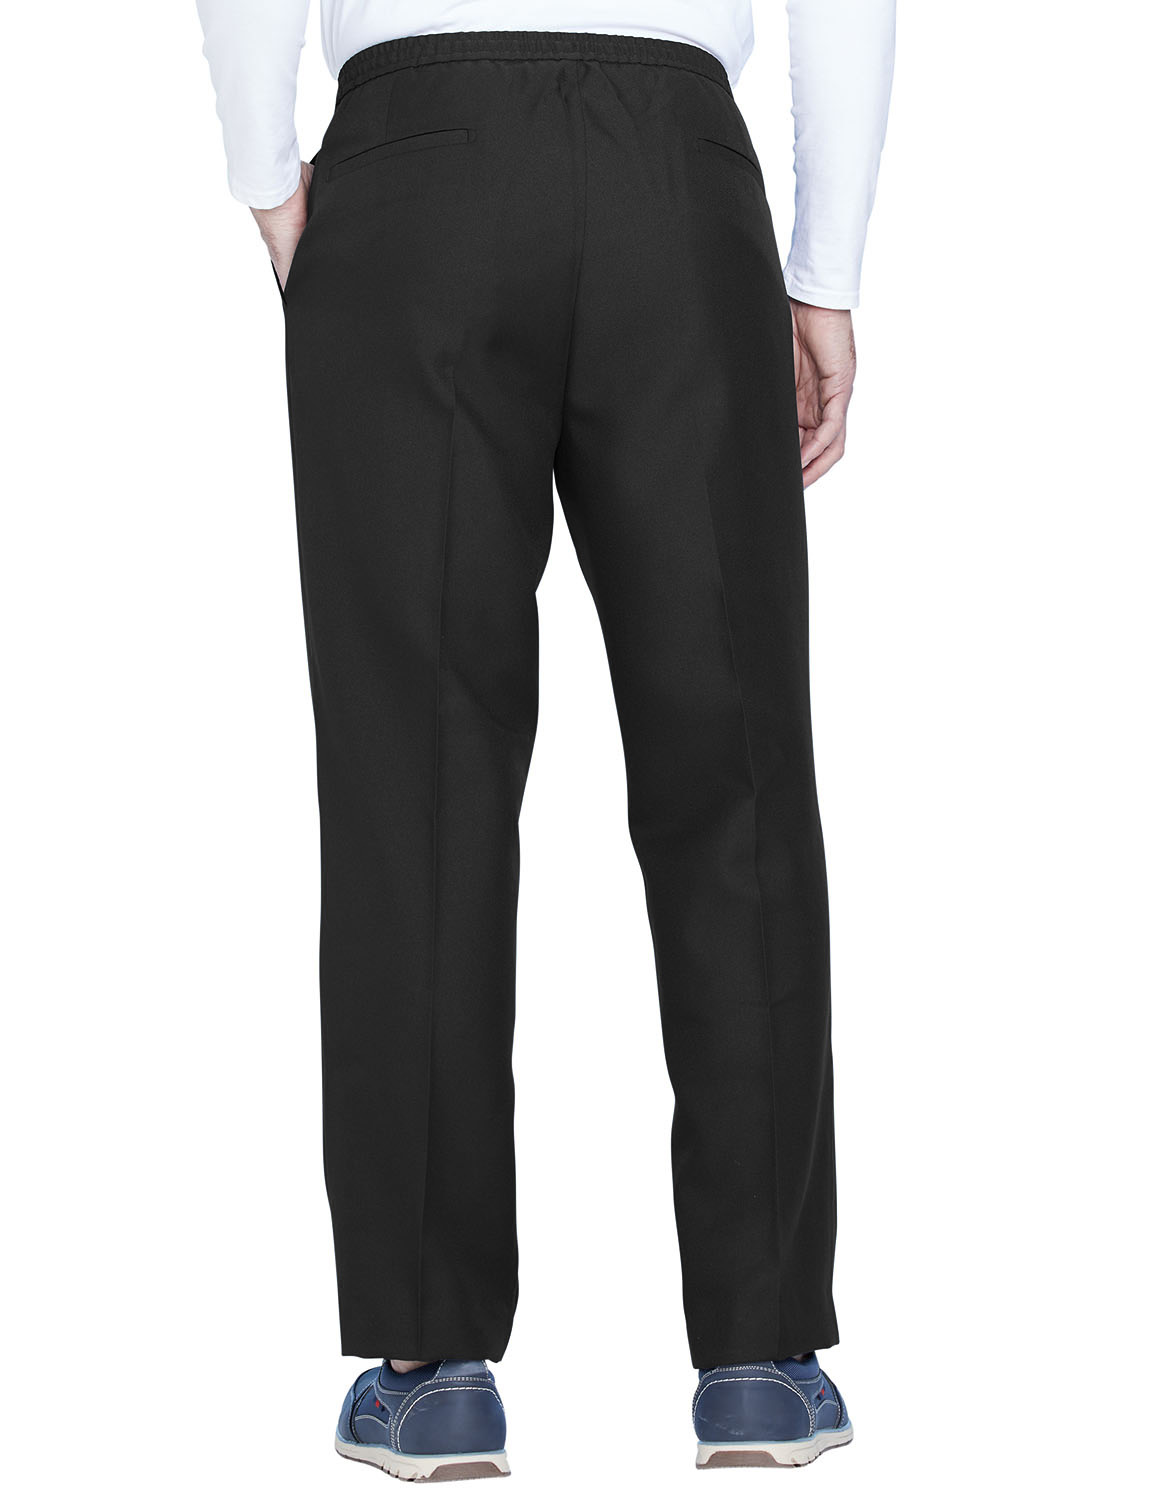 Elasticated Trouser Woven, Comfortable Smart Pull on Stylish Pants